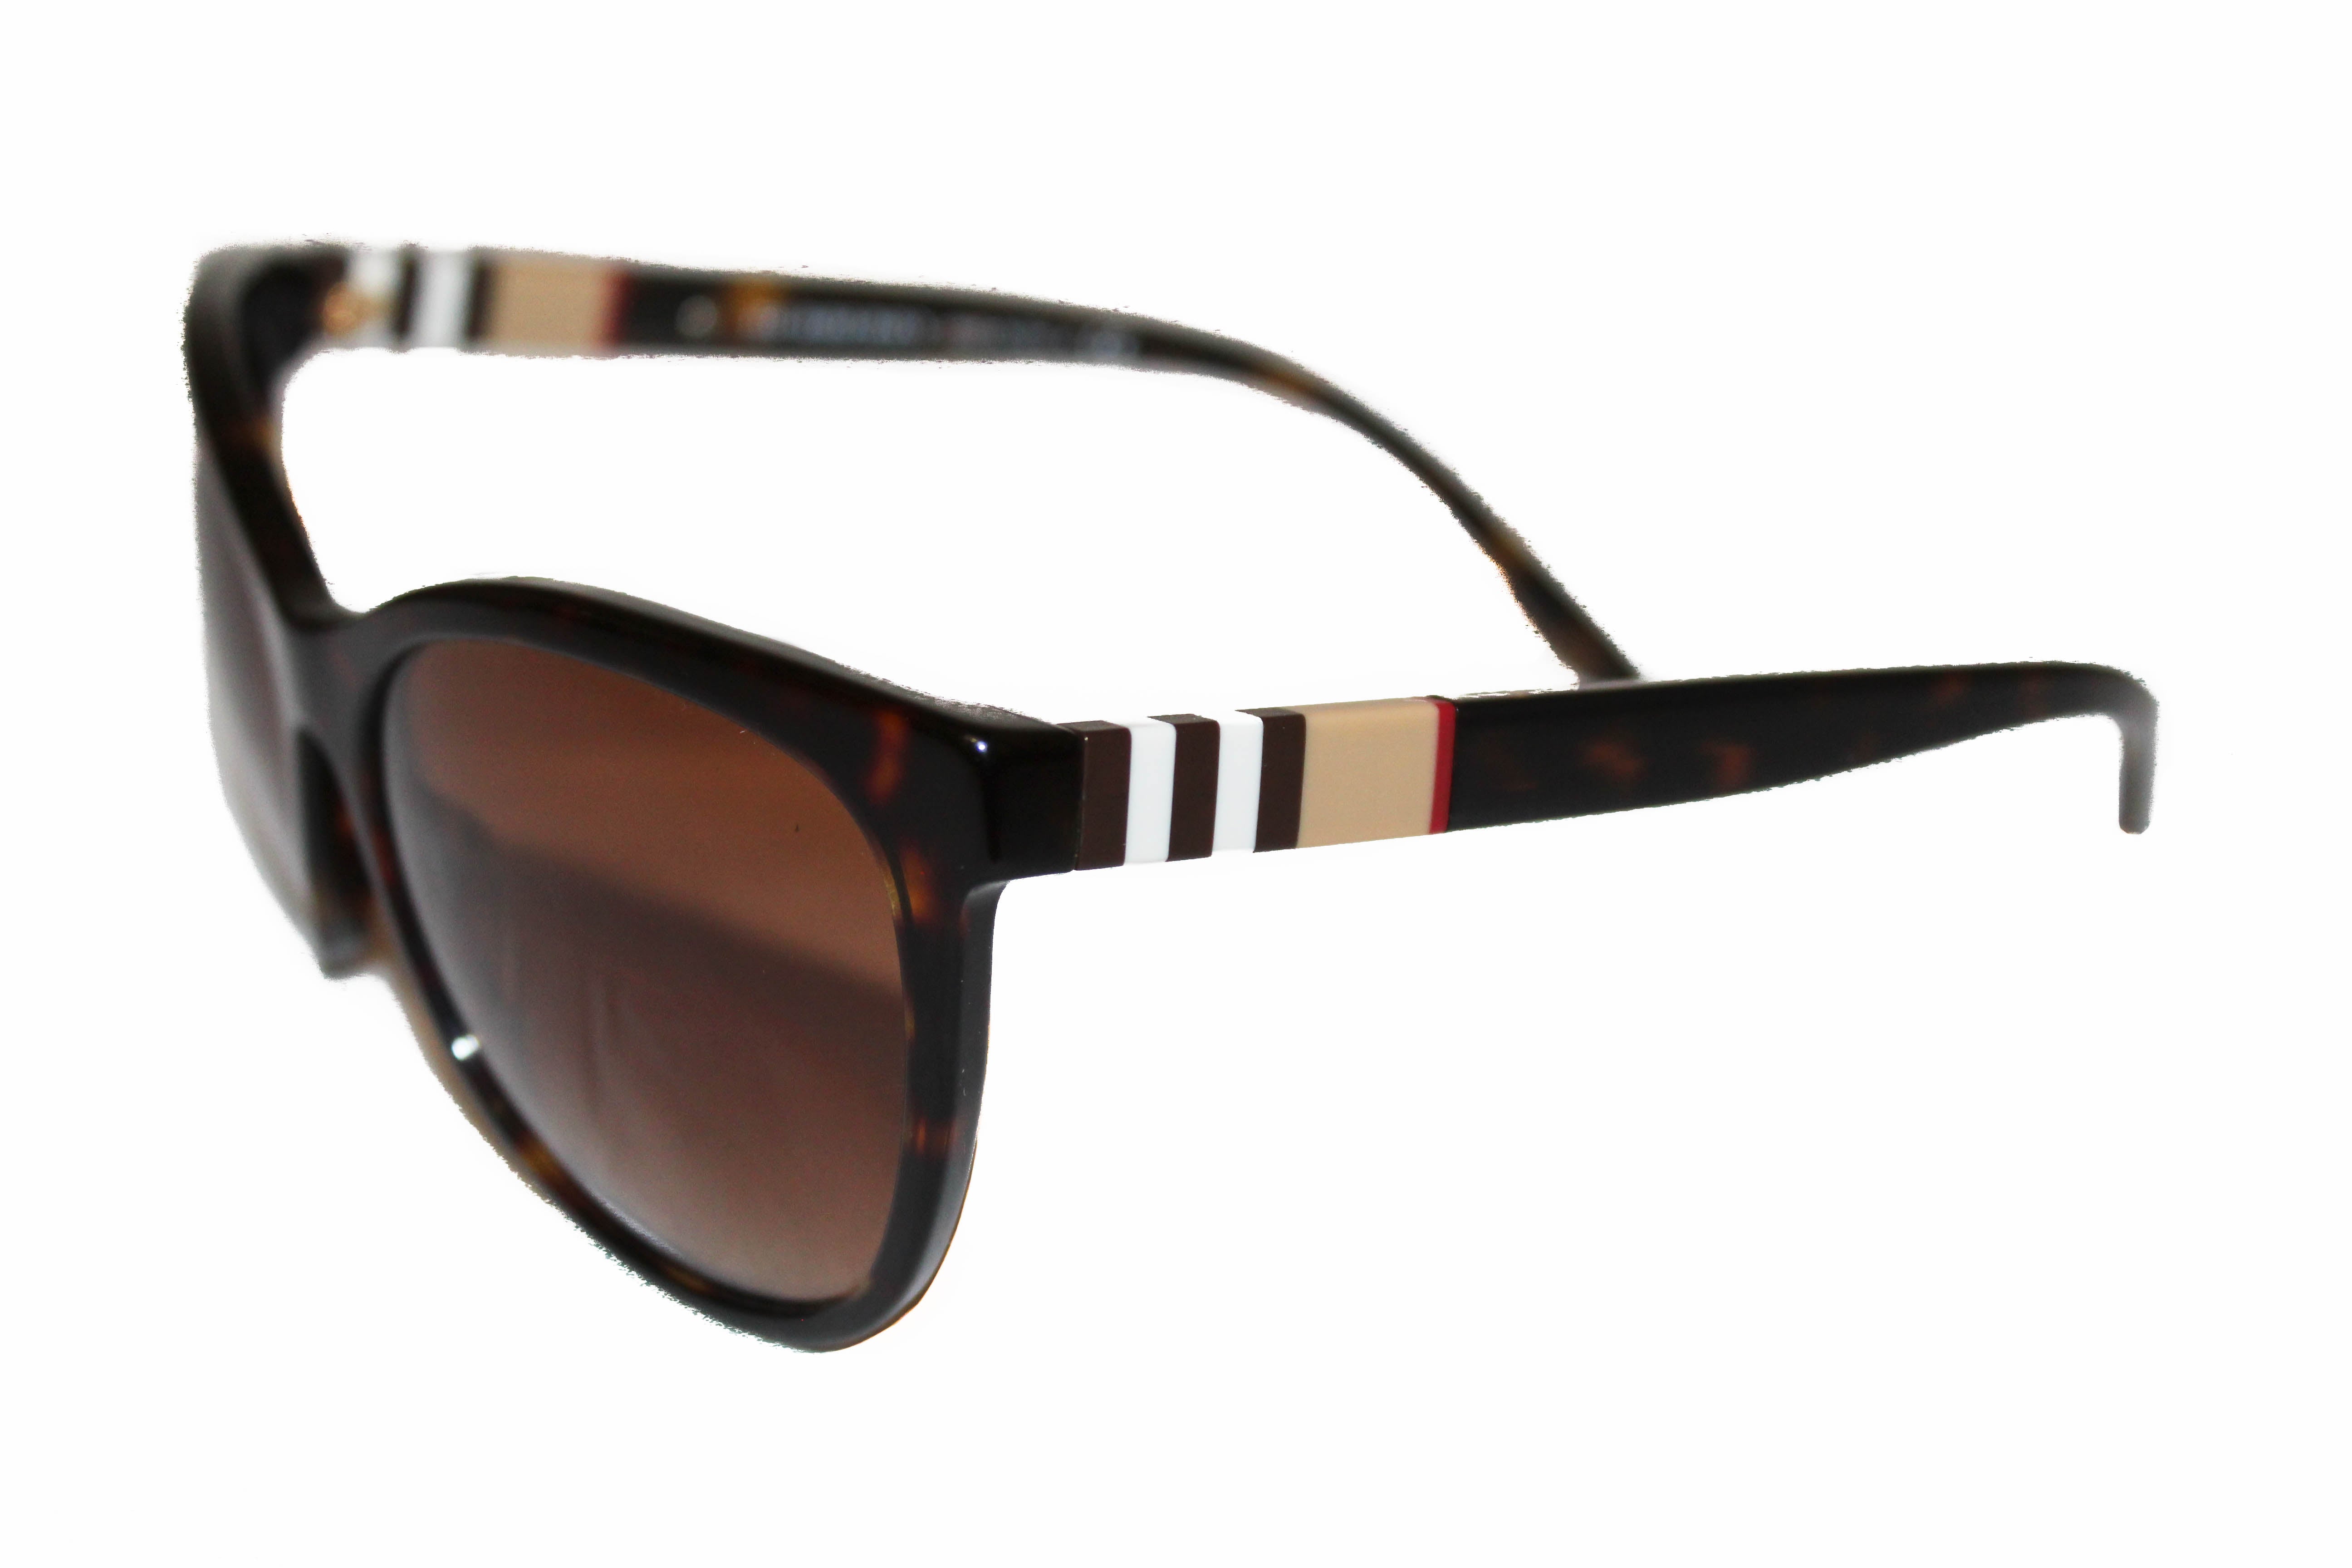 Authentic Burberry Brown Plastic Frame Sunglasses B4199